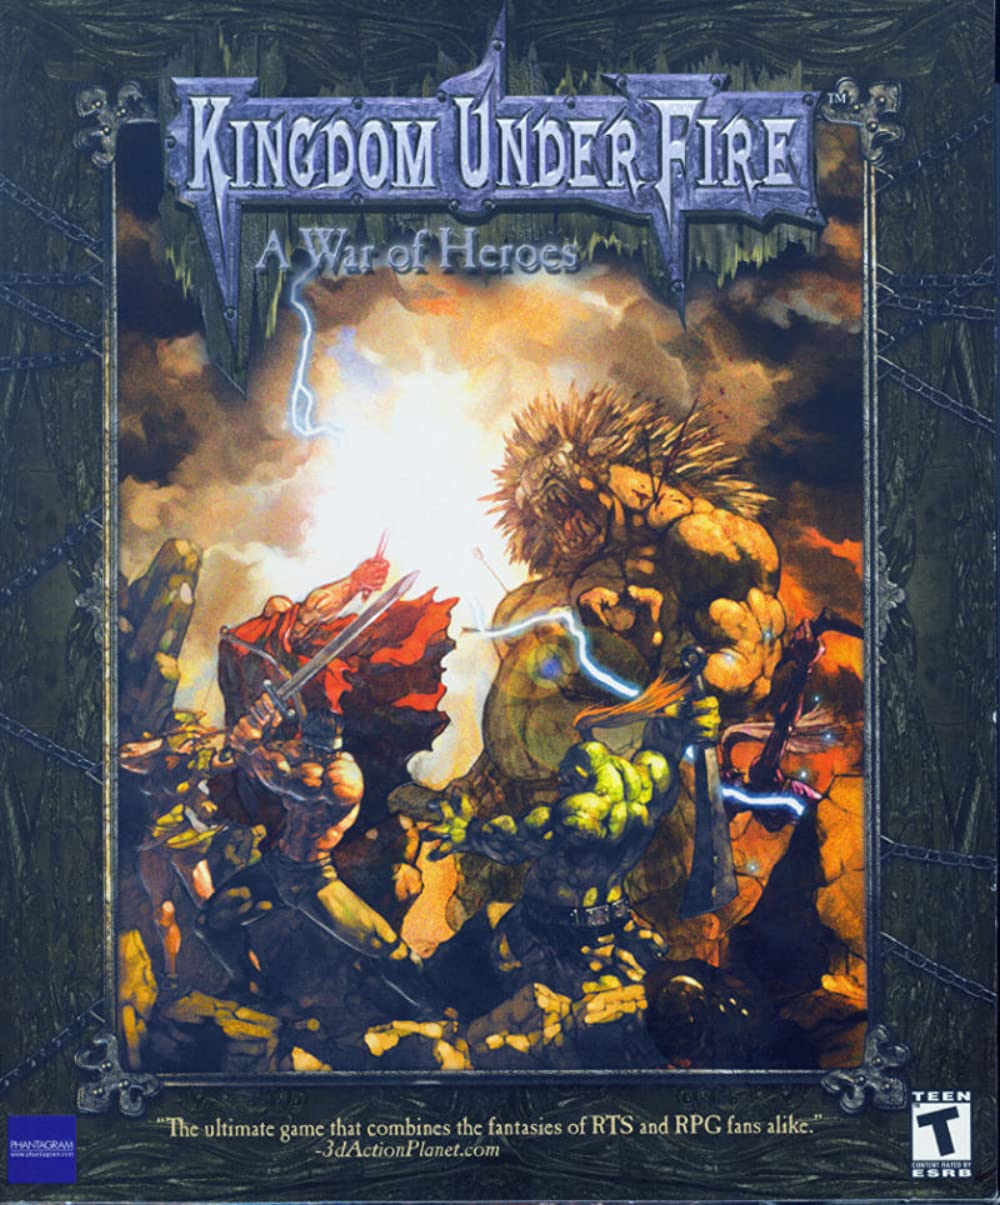 Download Kingdom Under Fire: A War of Heroes Movie | Kingdom Under Fire: A War Of Heroes Movie Review